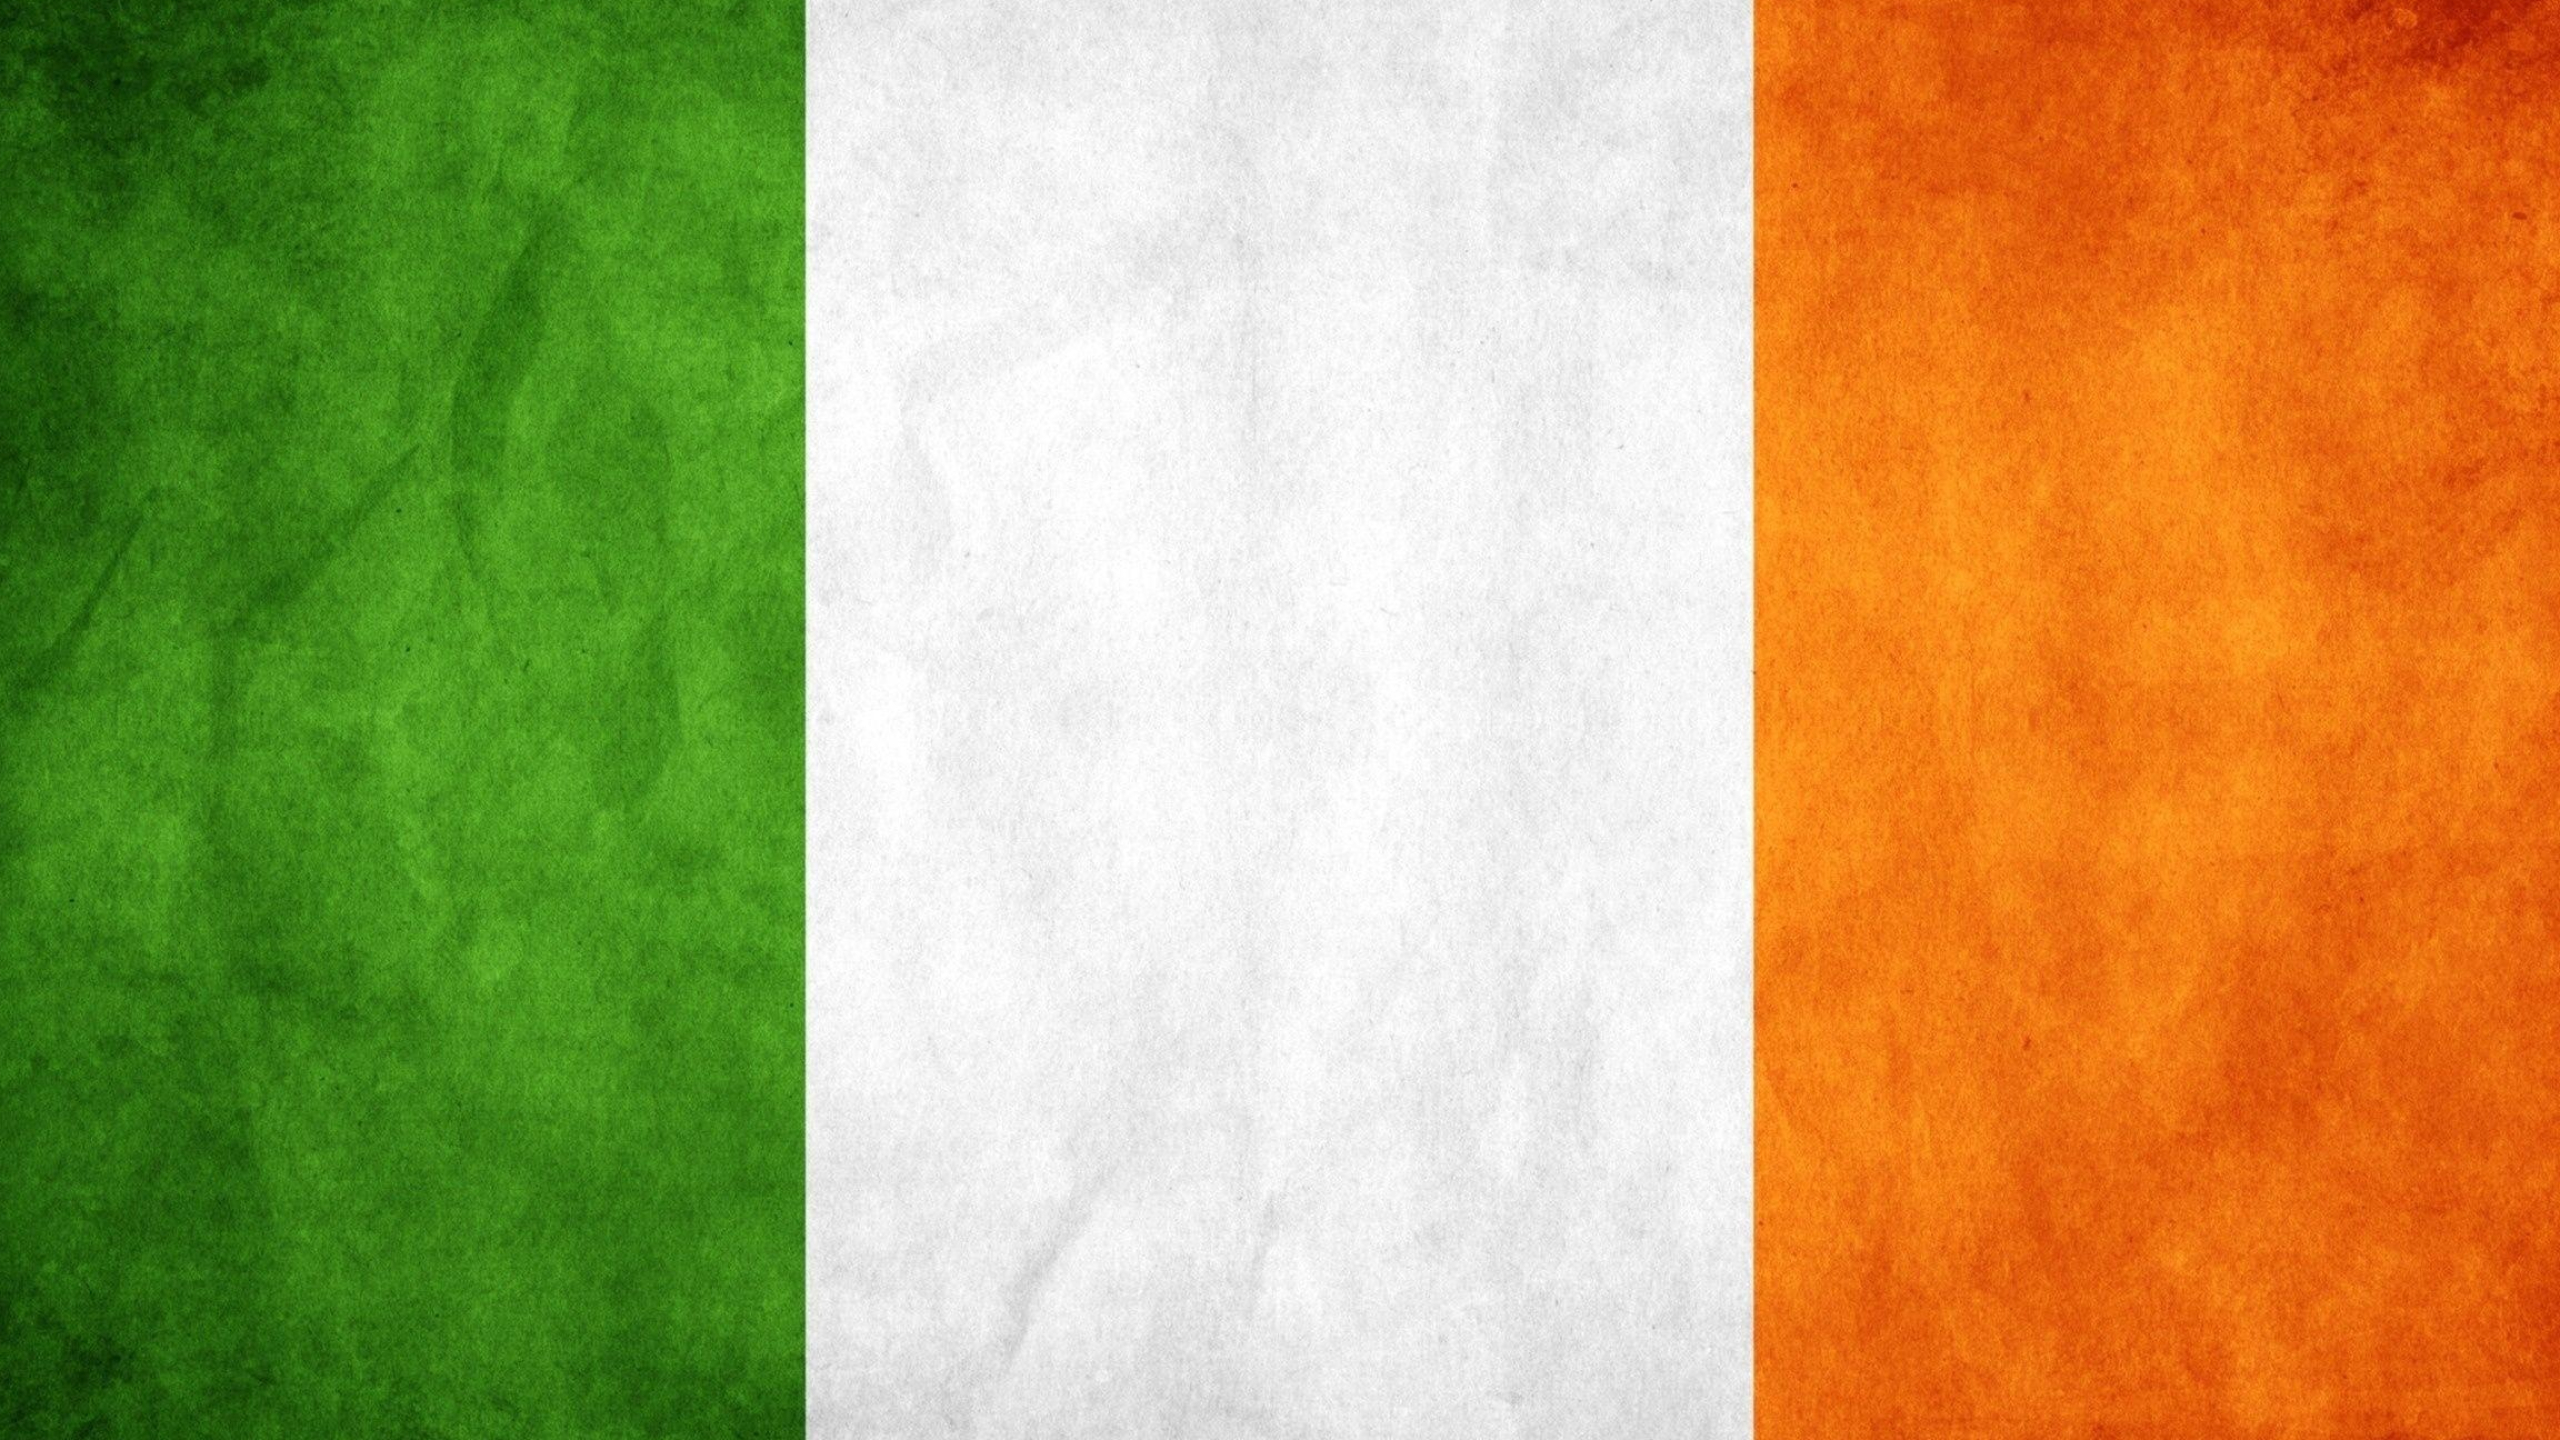 HD wallpaper, Celtic Heritage, 2560X1440 Hd Desktop, Irish Flag, Symbol Of Ireland, Desktop Hd Flag Of Ireland Wallpaper Image, National Pride